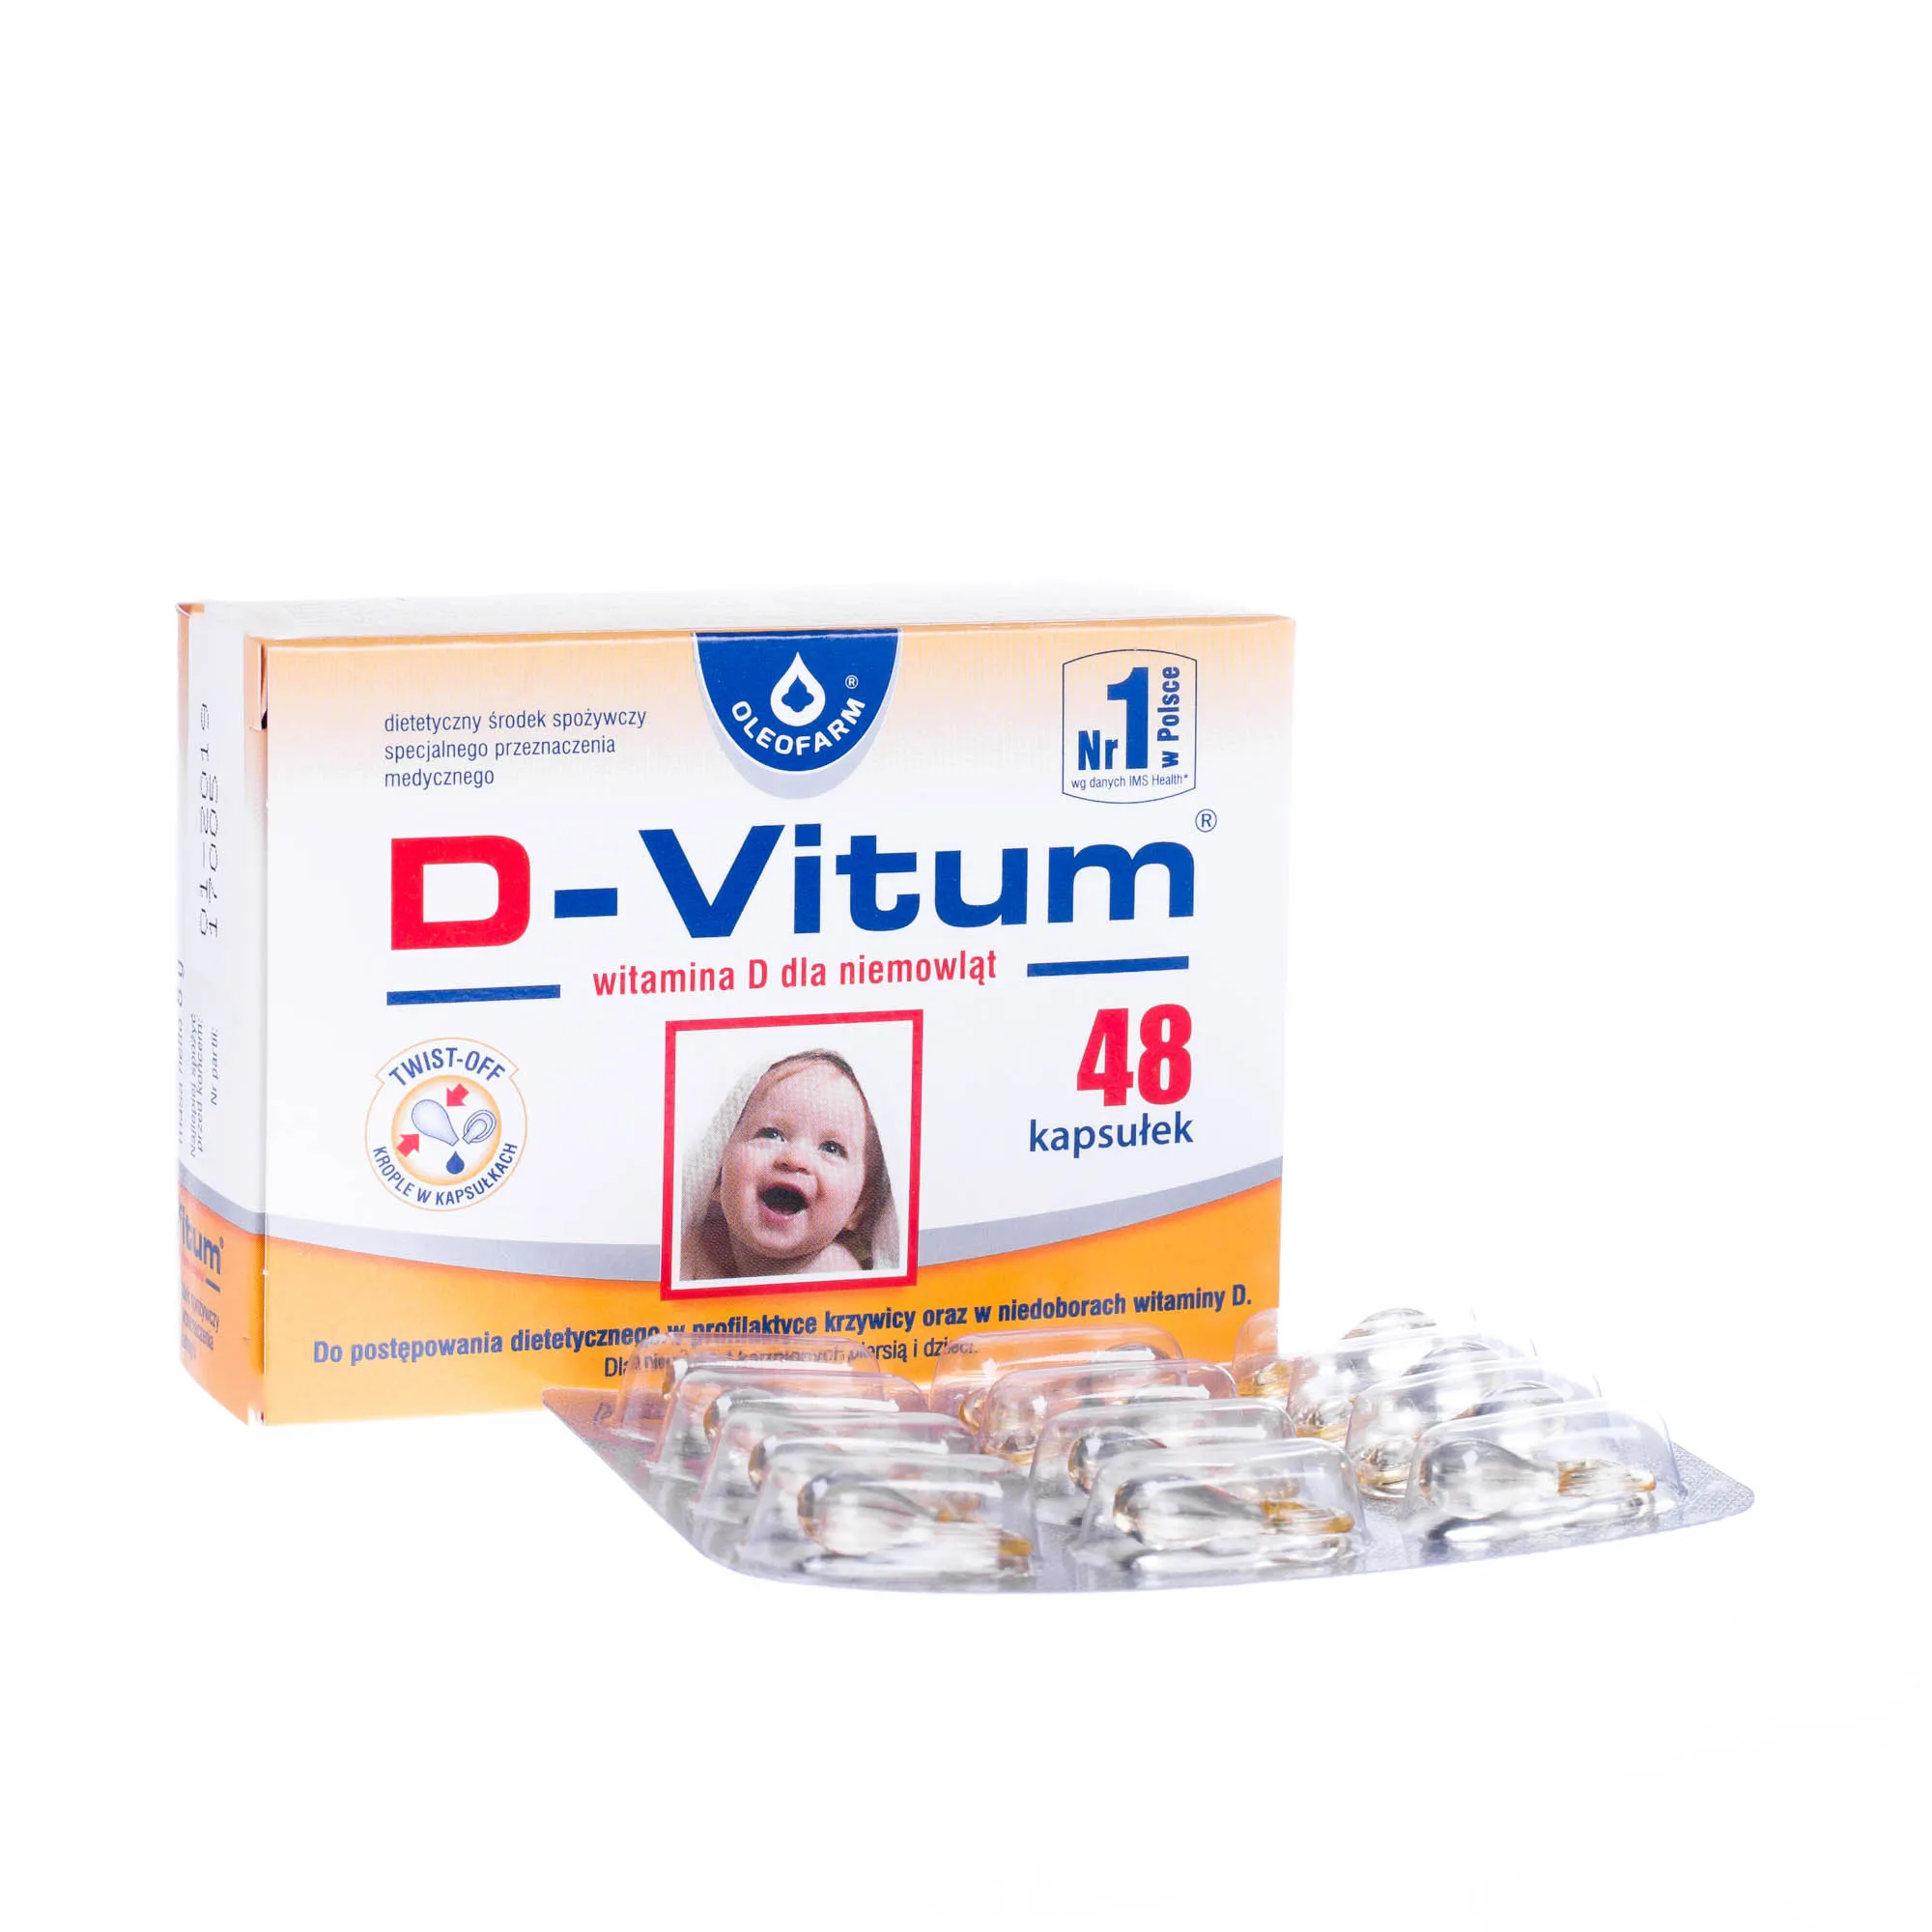 D-Vitum witamina D dla niemowląt, 48 kapsułek twist-off 